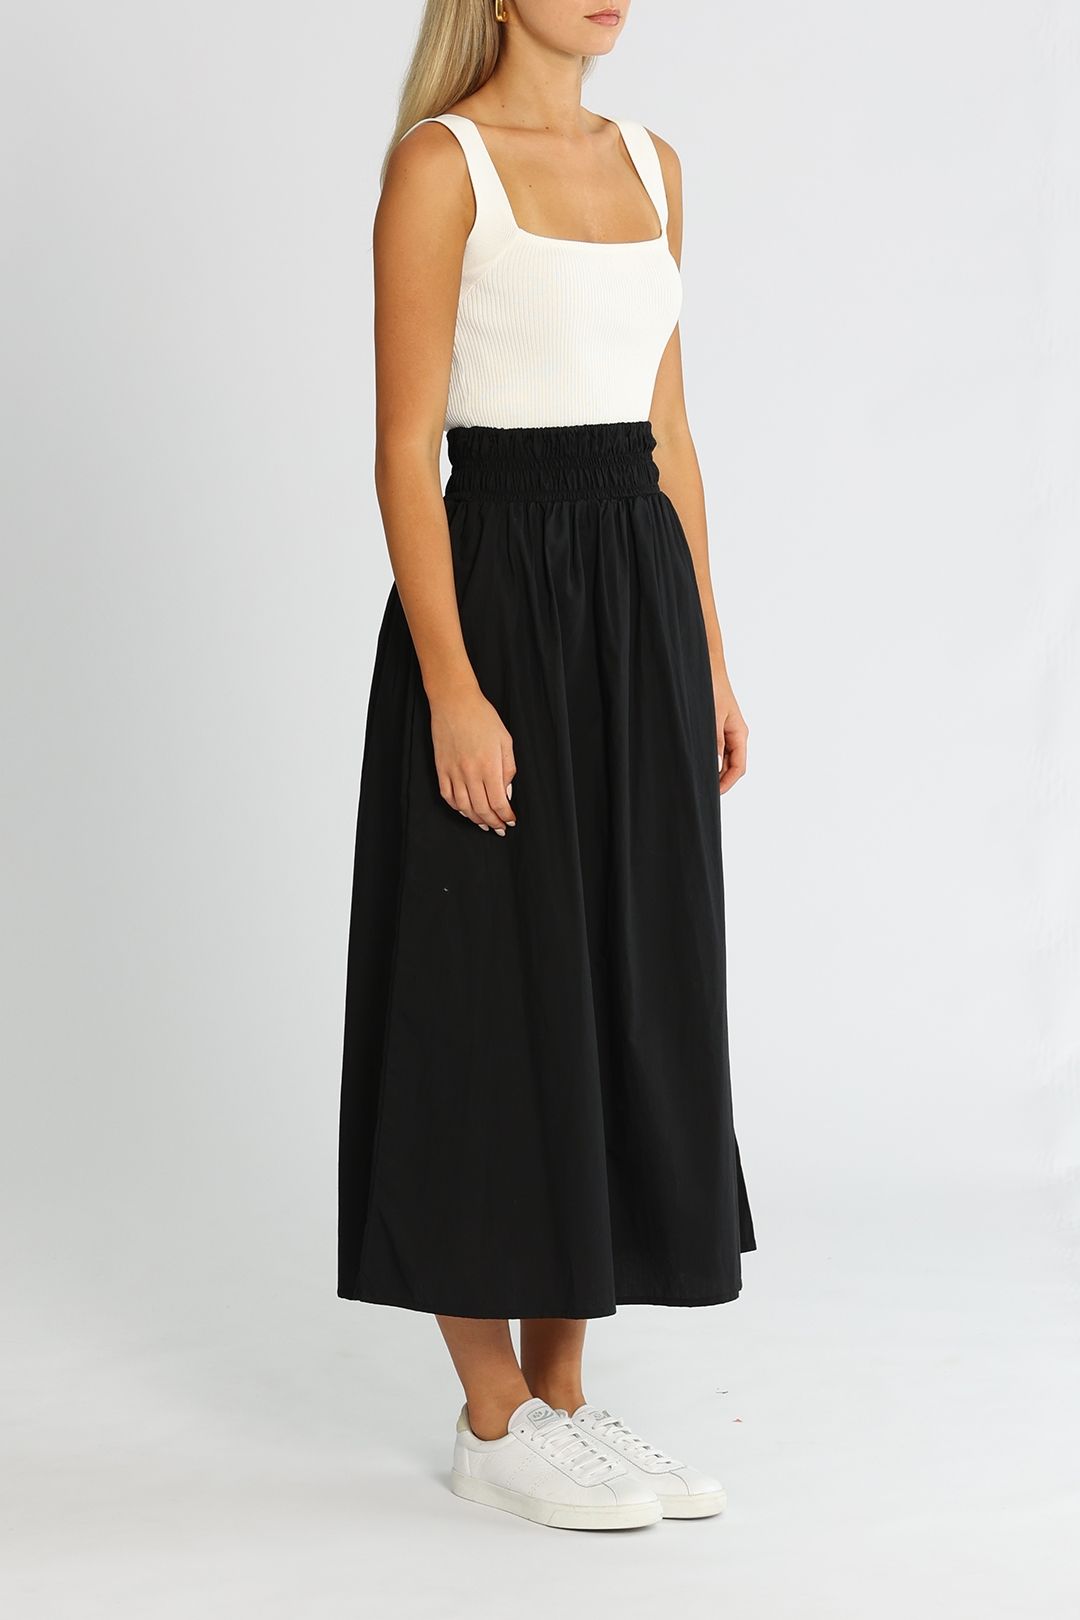 Faithfull Kiera Skirt Plain Black Smocked